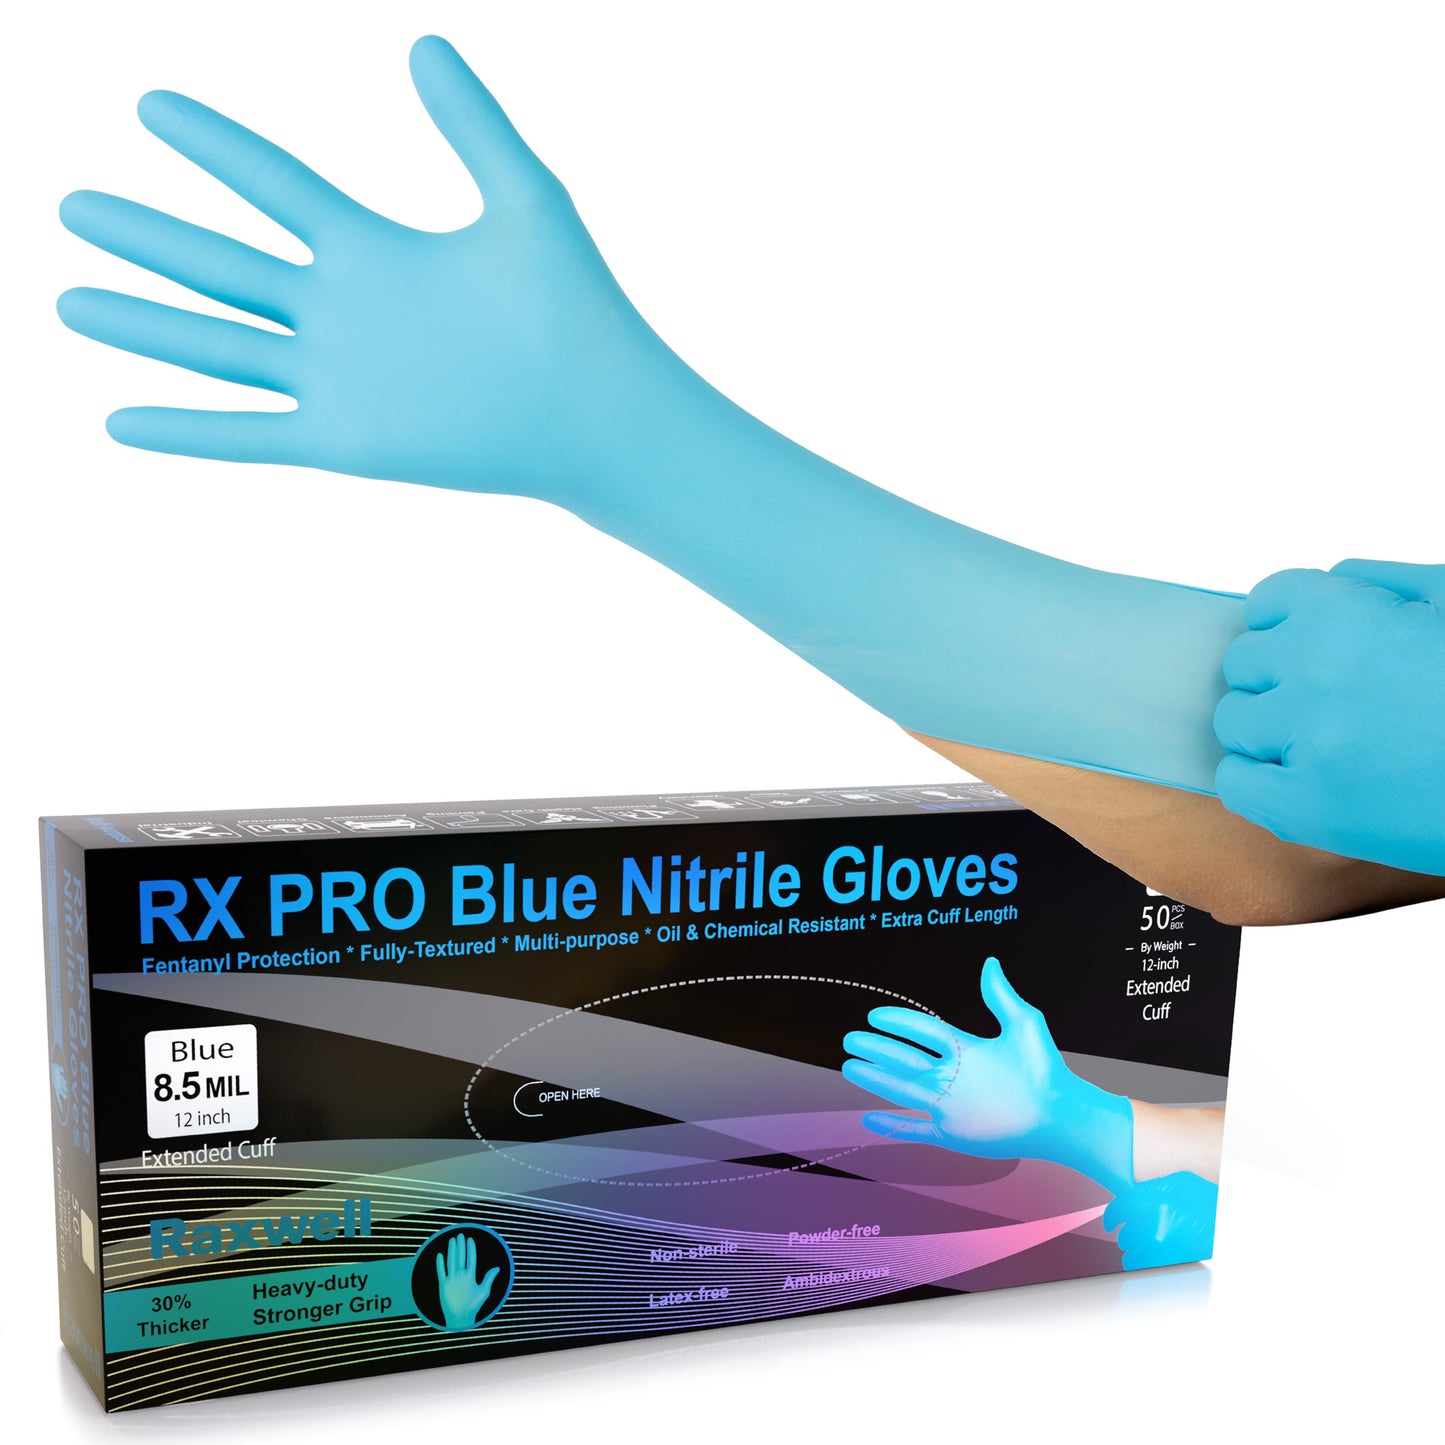 RX Pro Blue Nitrile Gloves